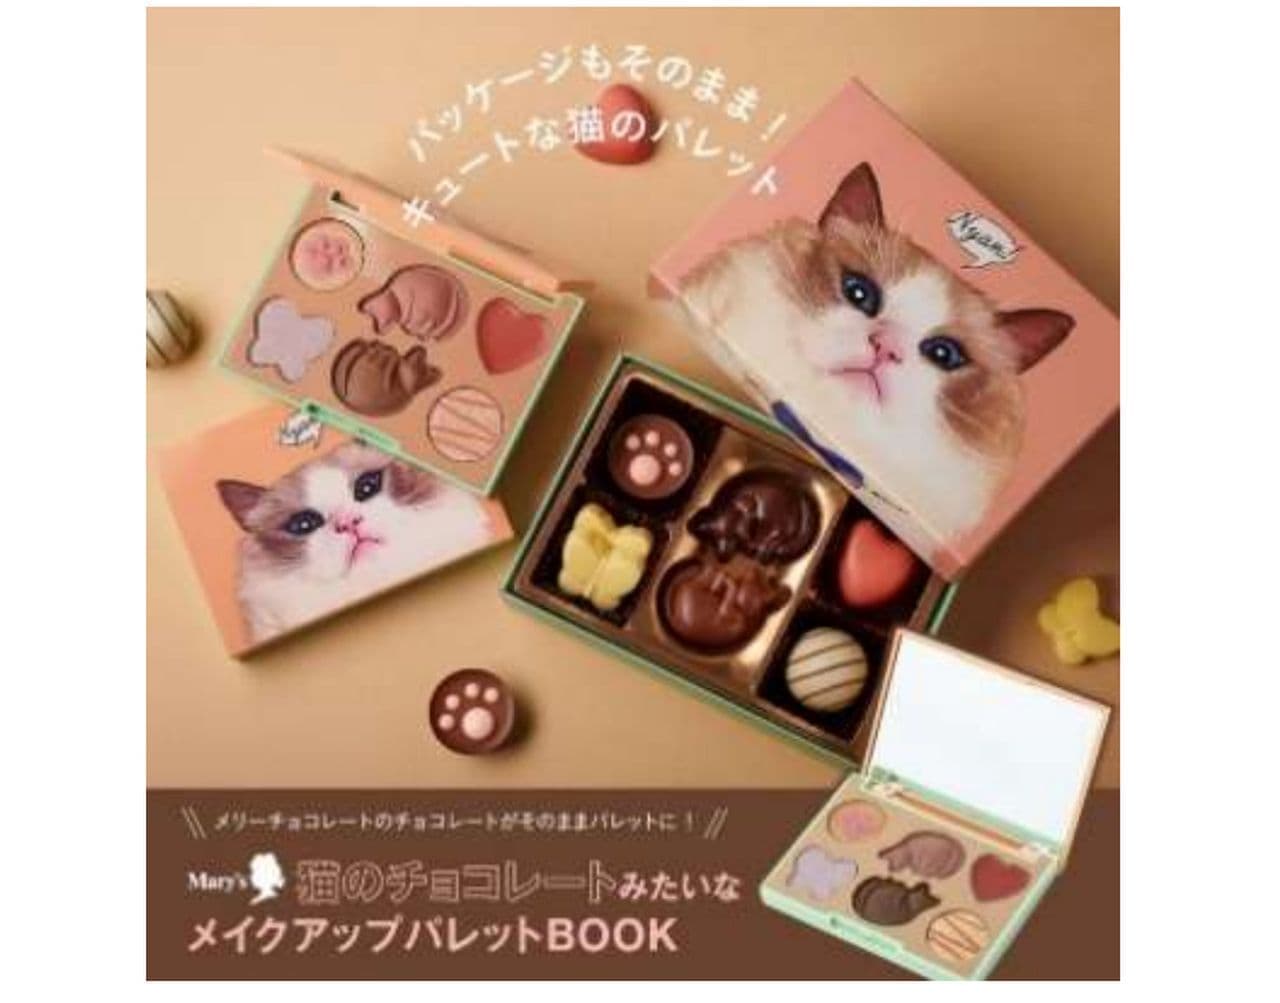 『Mary's 猫のチョコレートみたいなメイクアップパレットBOOK』